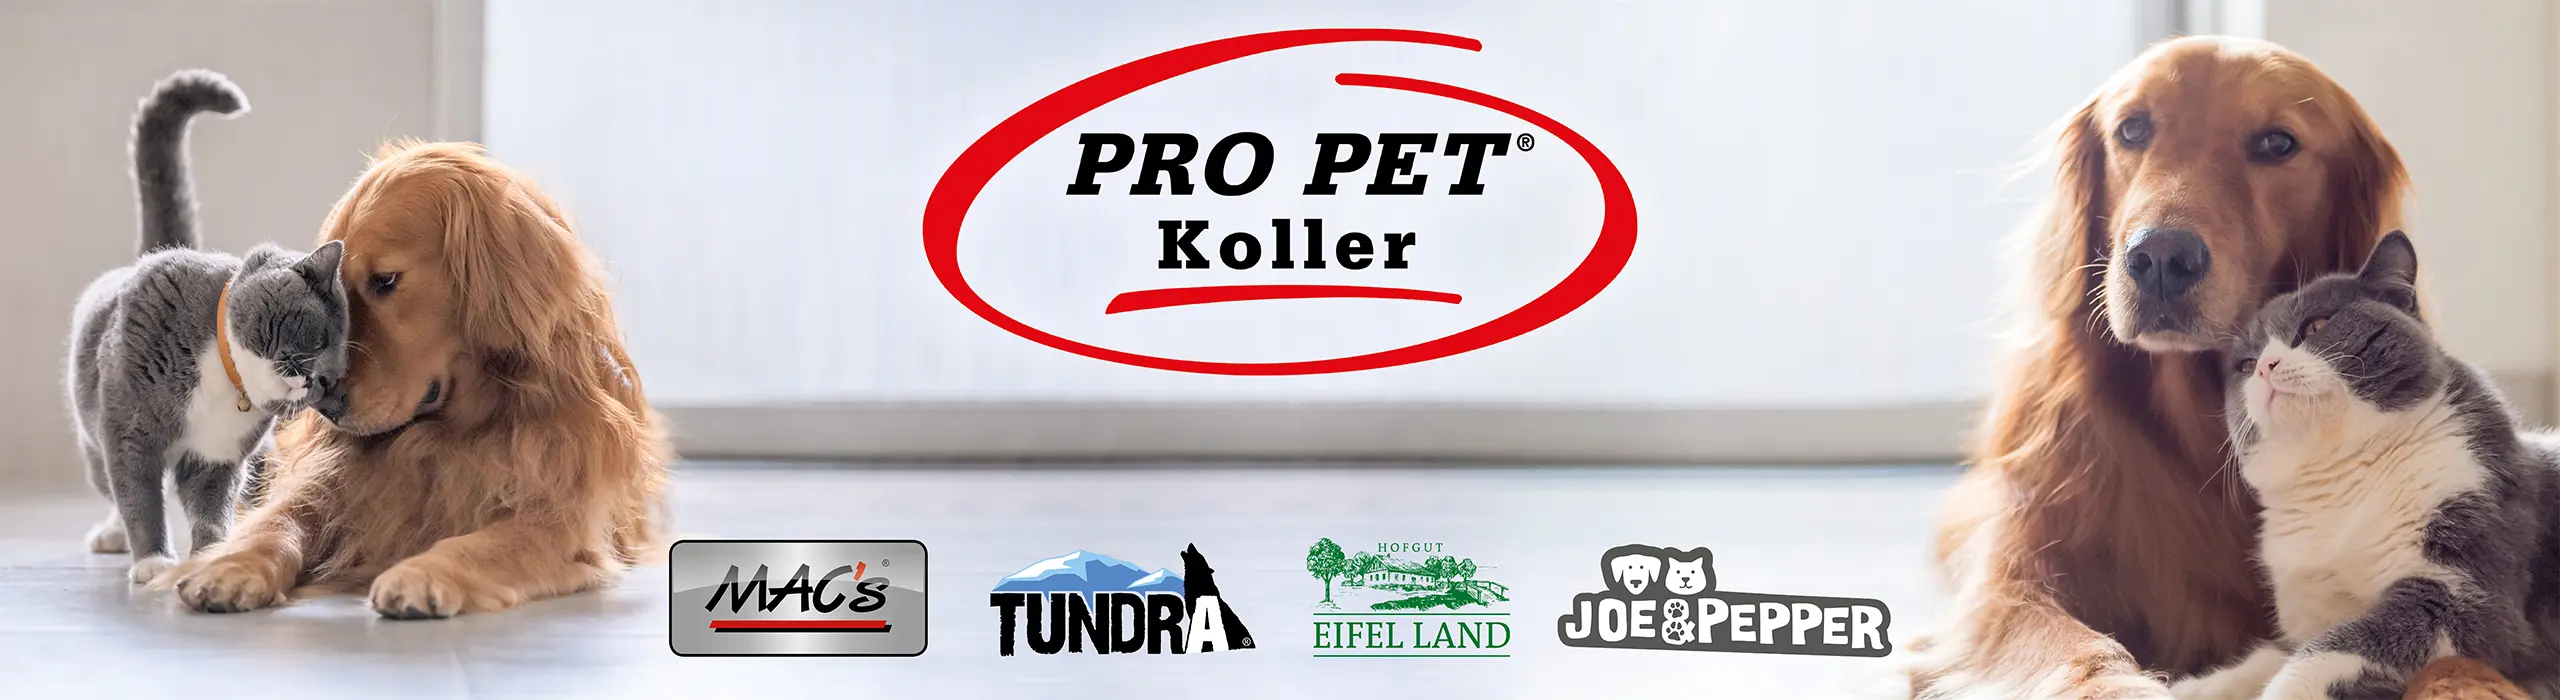 Pro Pet Koller GmbH 